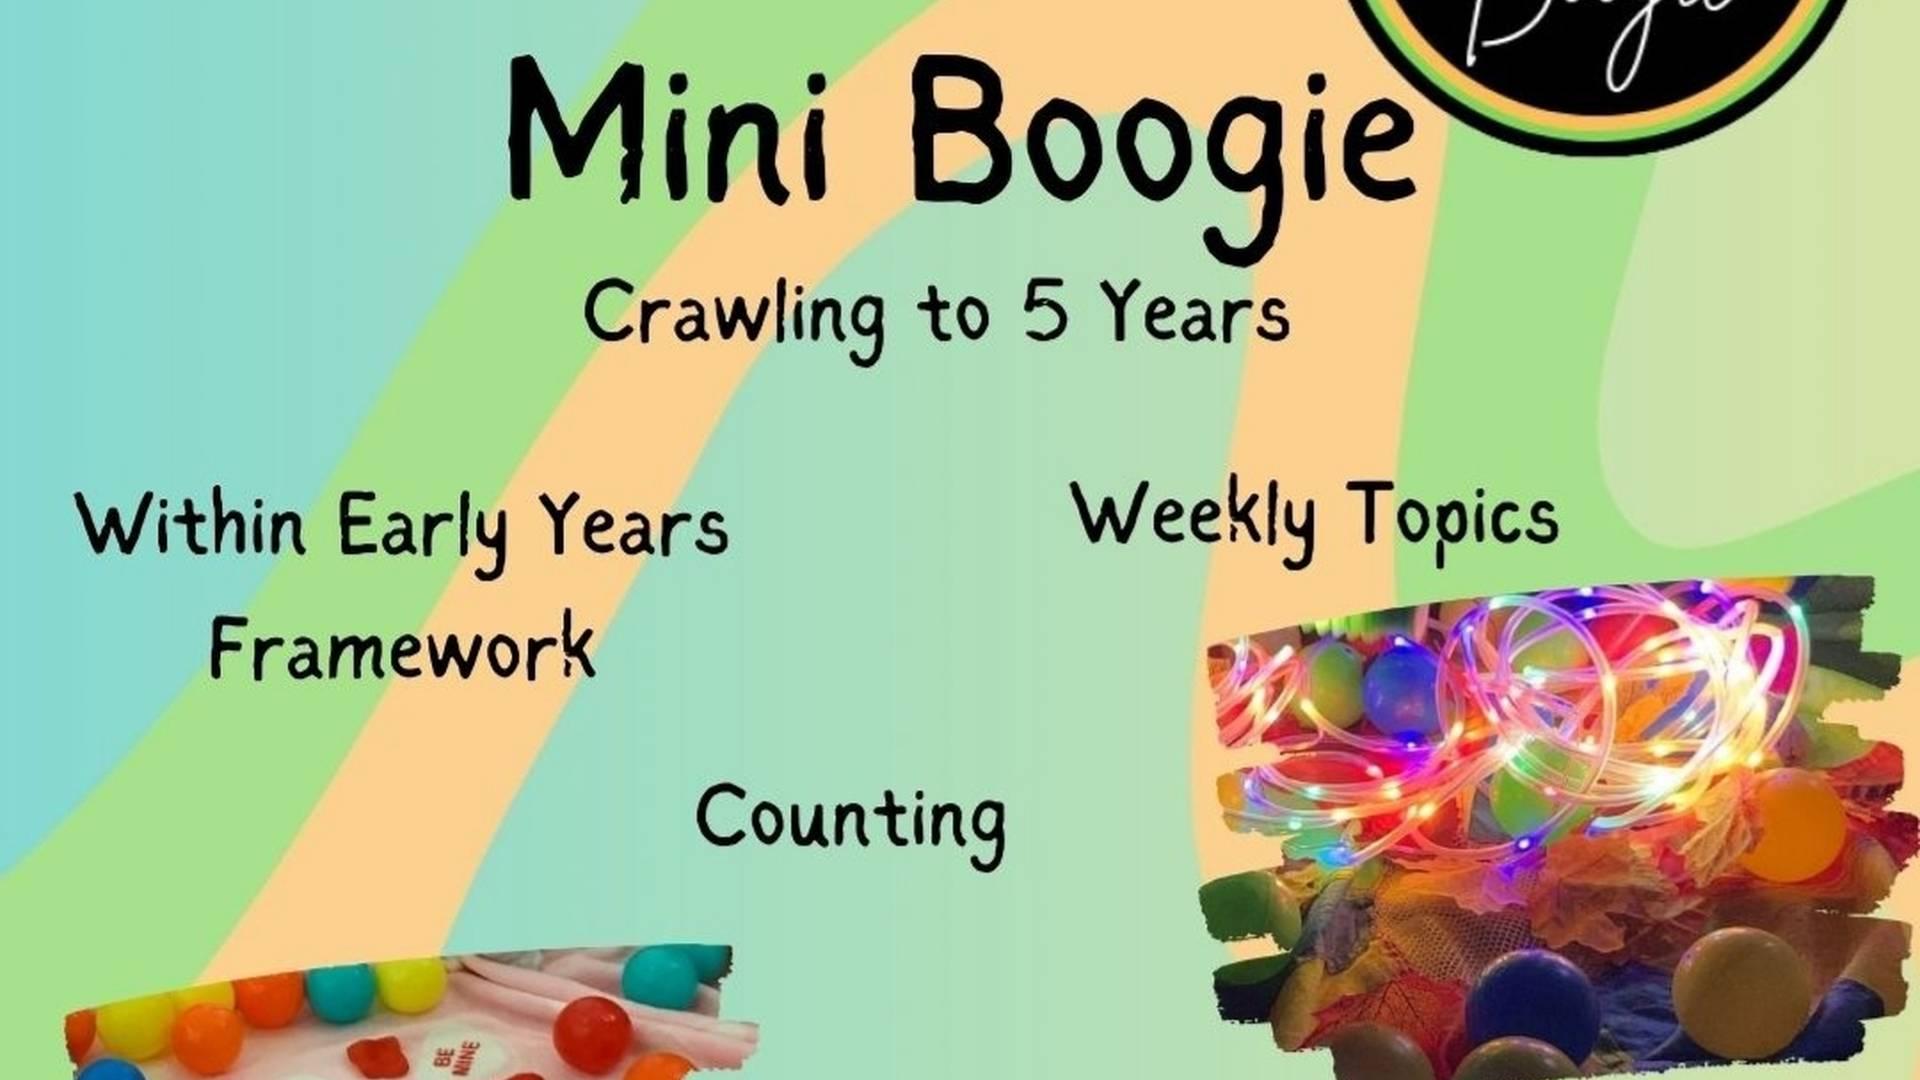 Mini Boogie photo